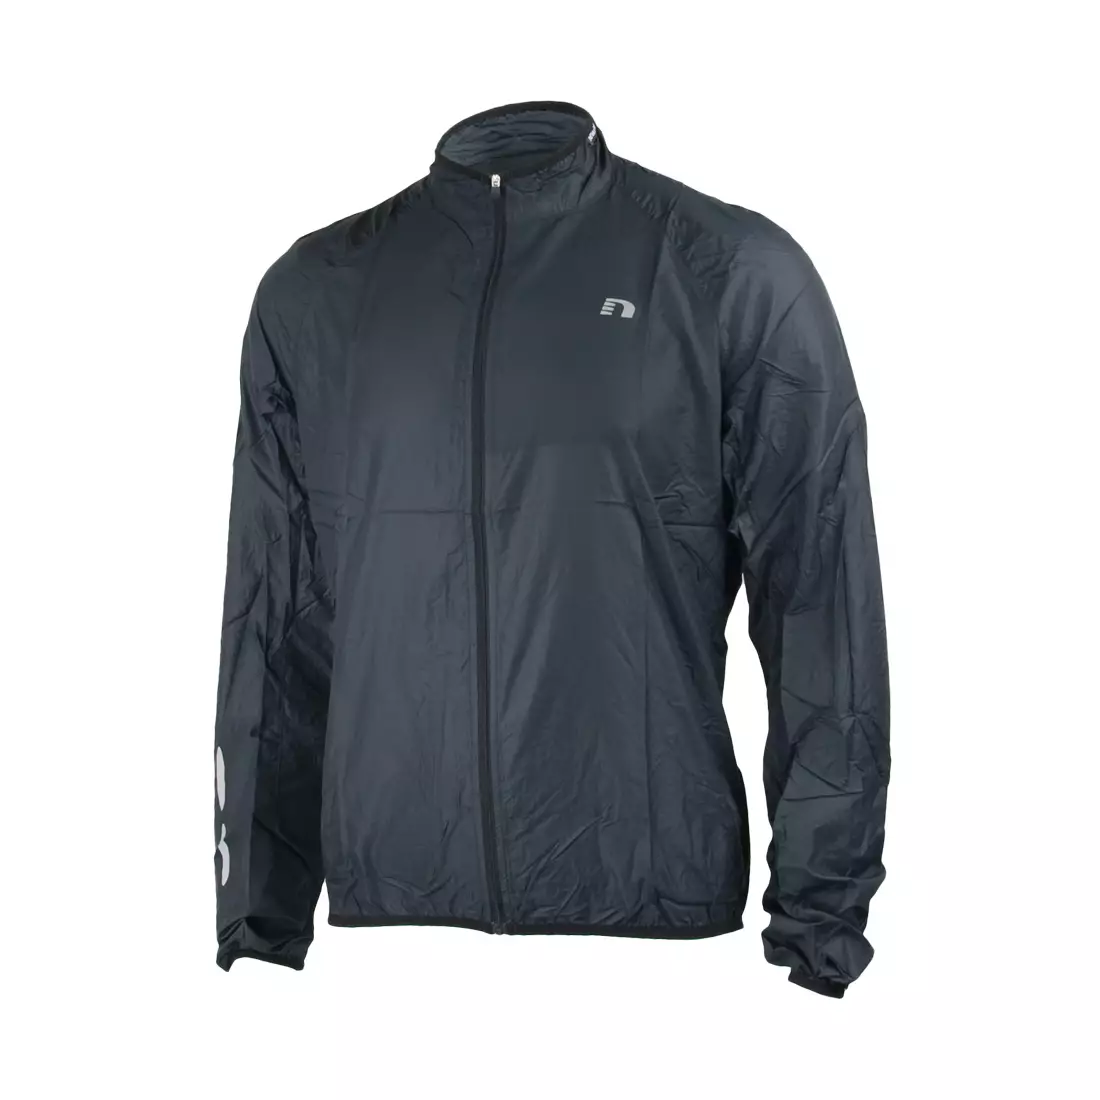 JACKET NEWLINE WINDPACK - jacket sport ultra-ușor 14176-060, culoare: negru